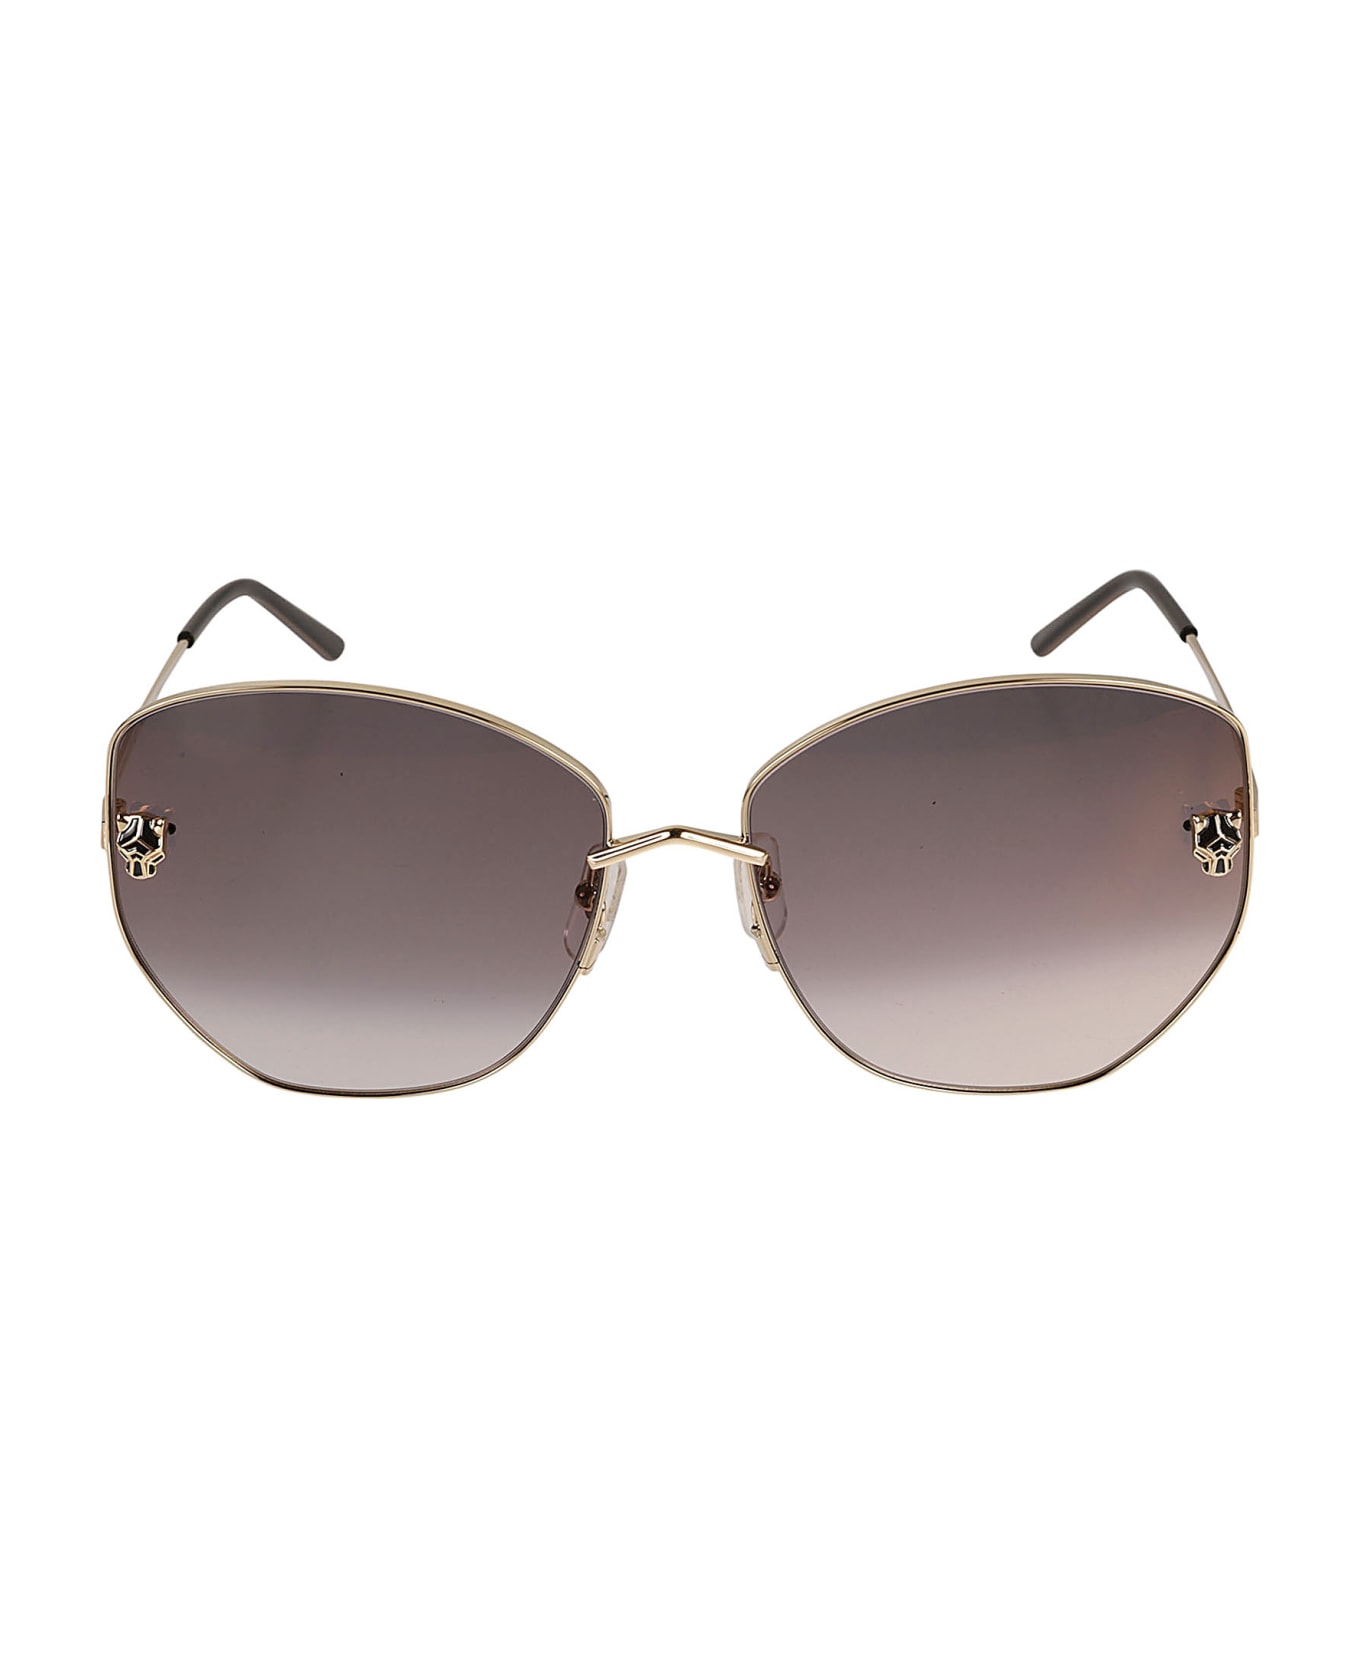 Cartier Eyewear Butterfly Sunglasses - 001 gold gold grey サングラス